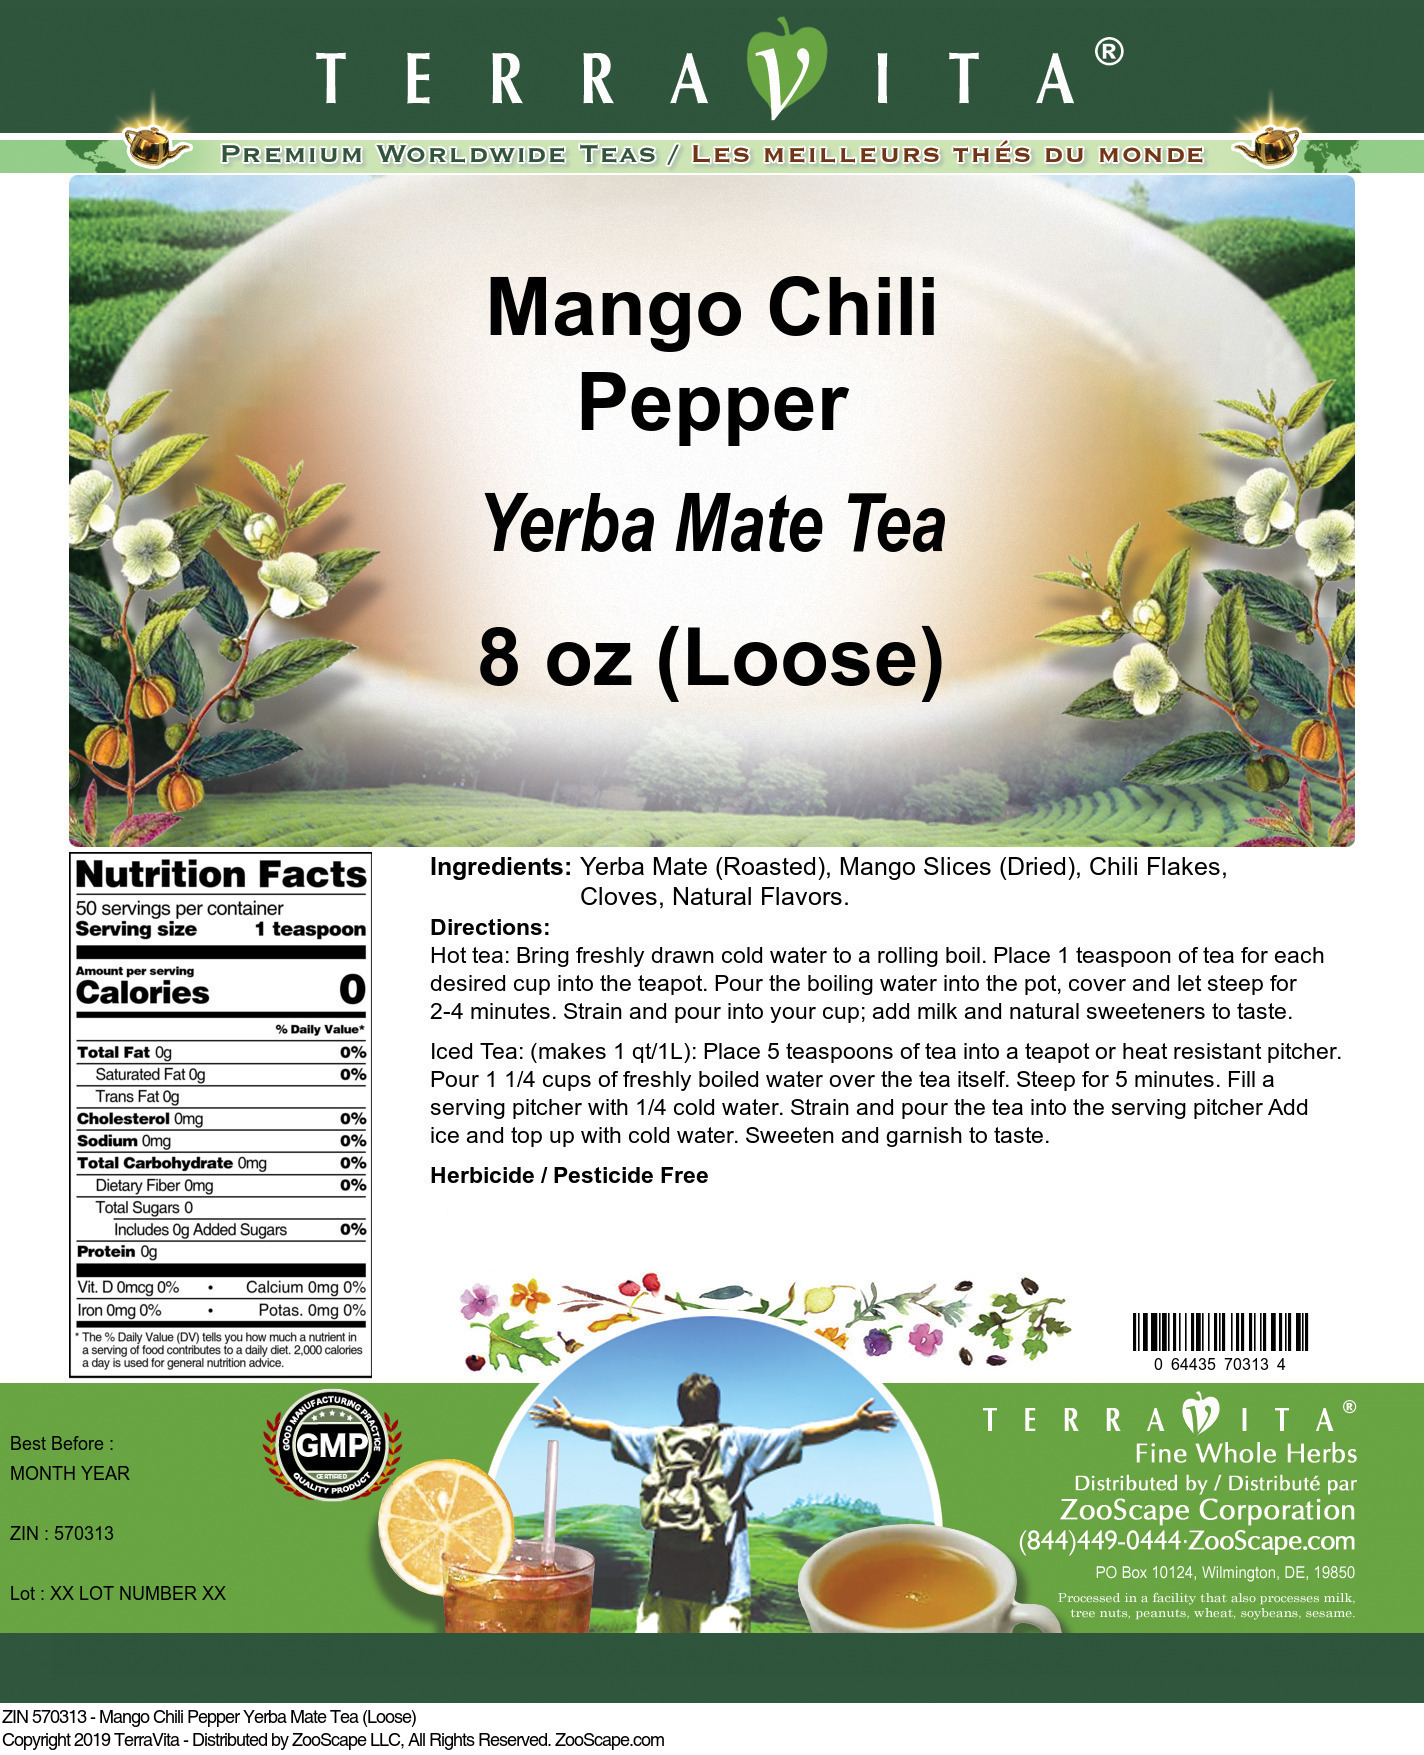 Mango Chili Pepper Yerba Mate Tea (Loose) - Label